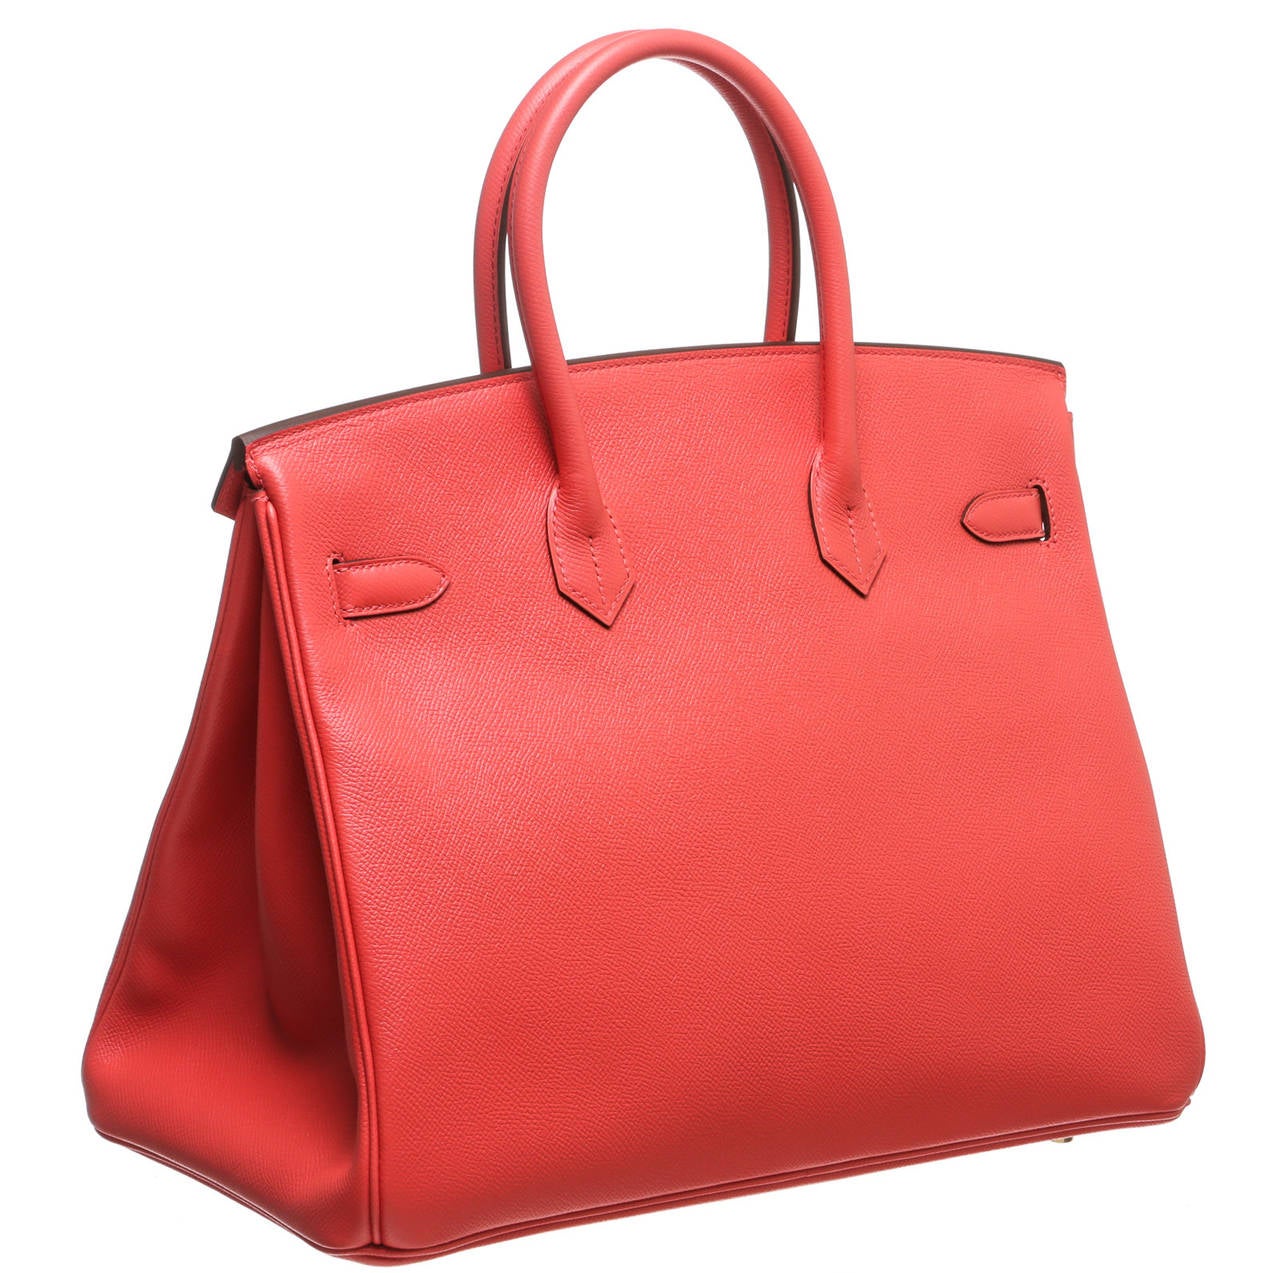 Hermes Rouge Pivoine (Pink) Epsom Leather 35cm Birkin Handbag GHW NEW For Sale 1